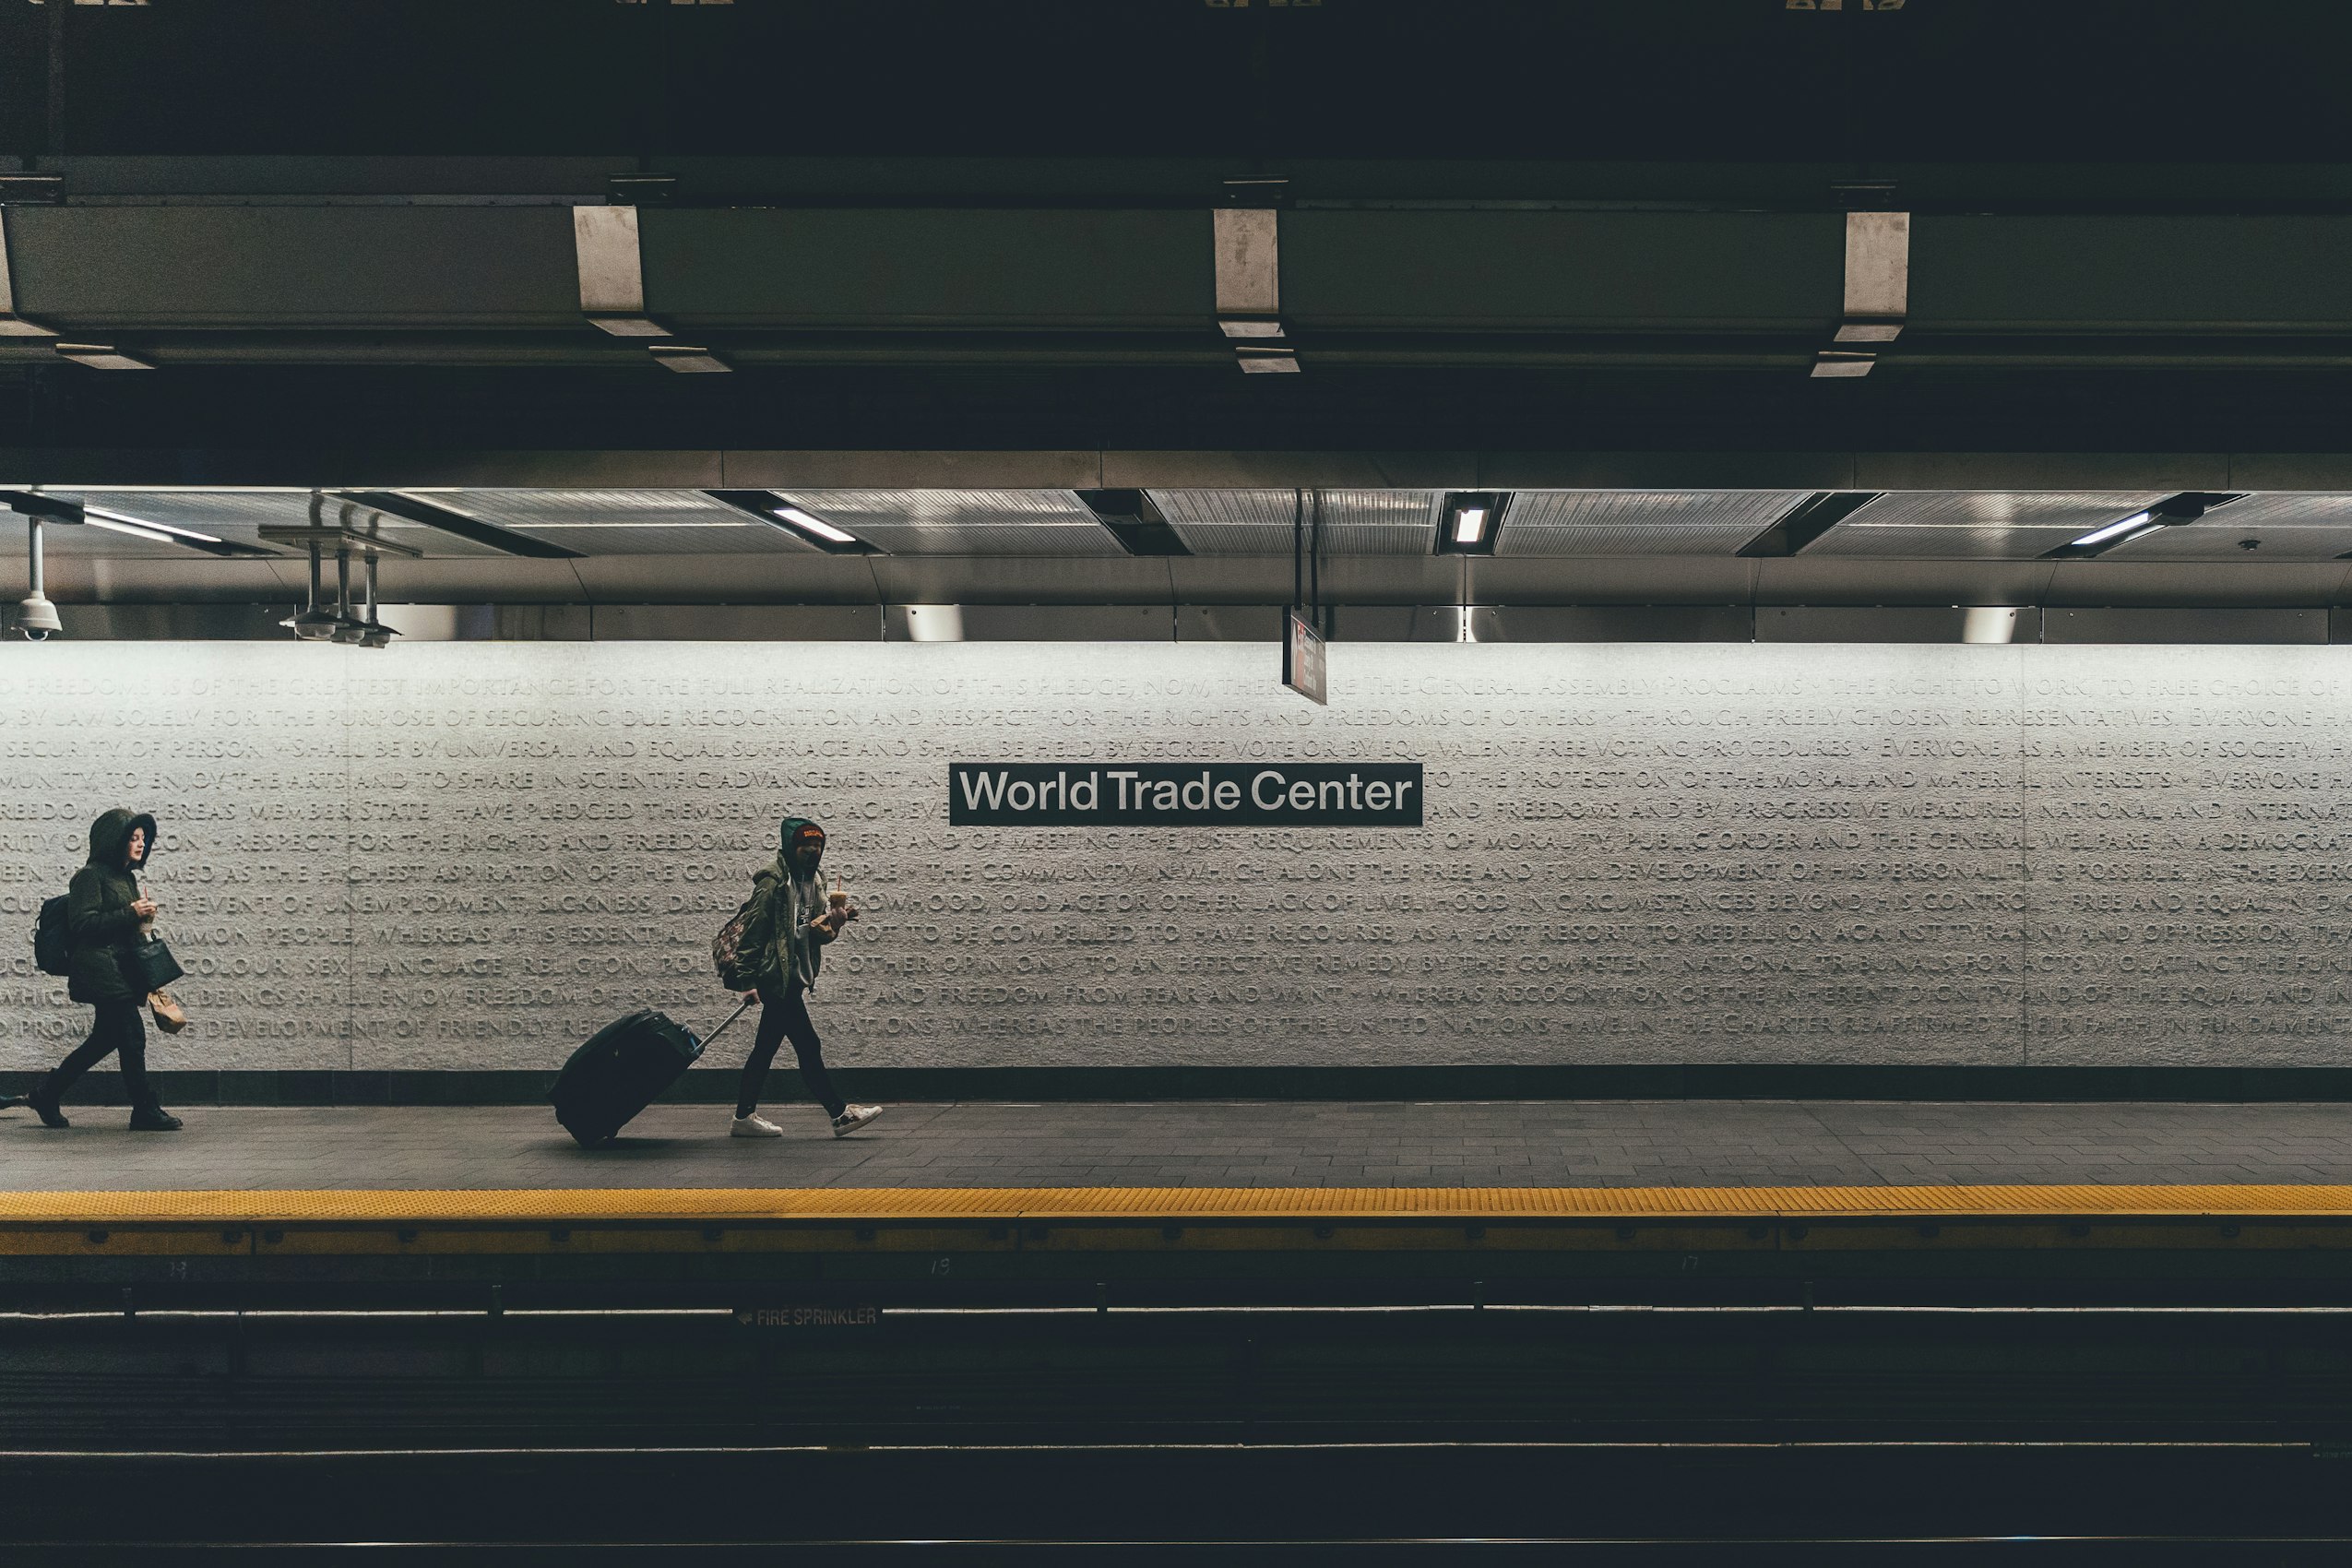 World Trade Center Subway Station Wall